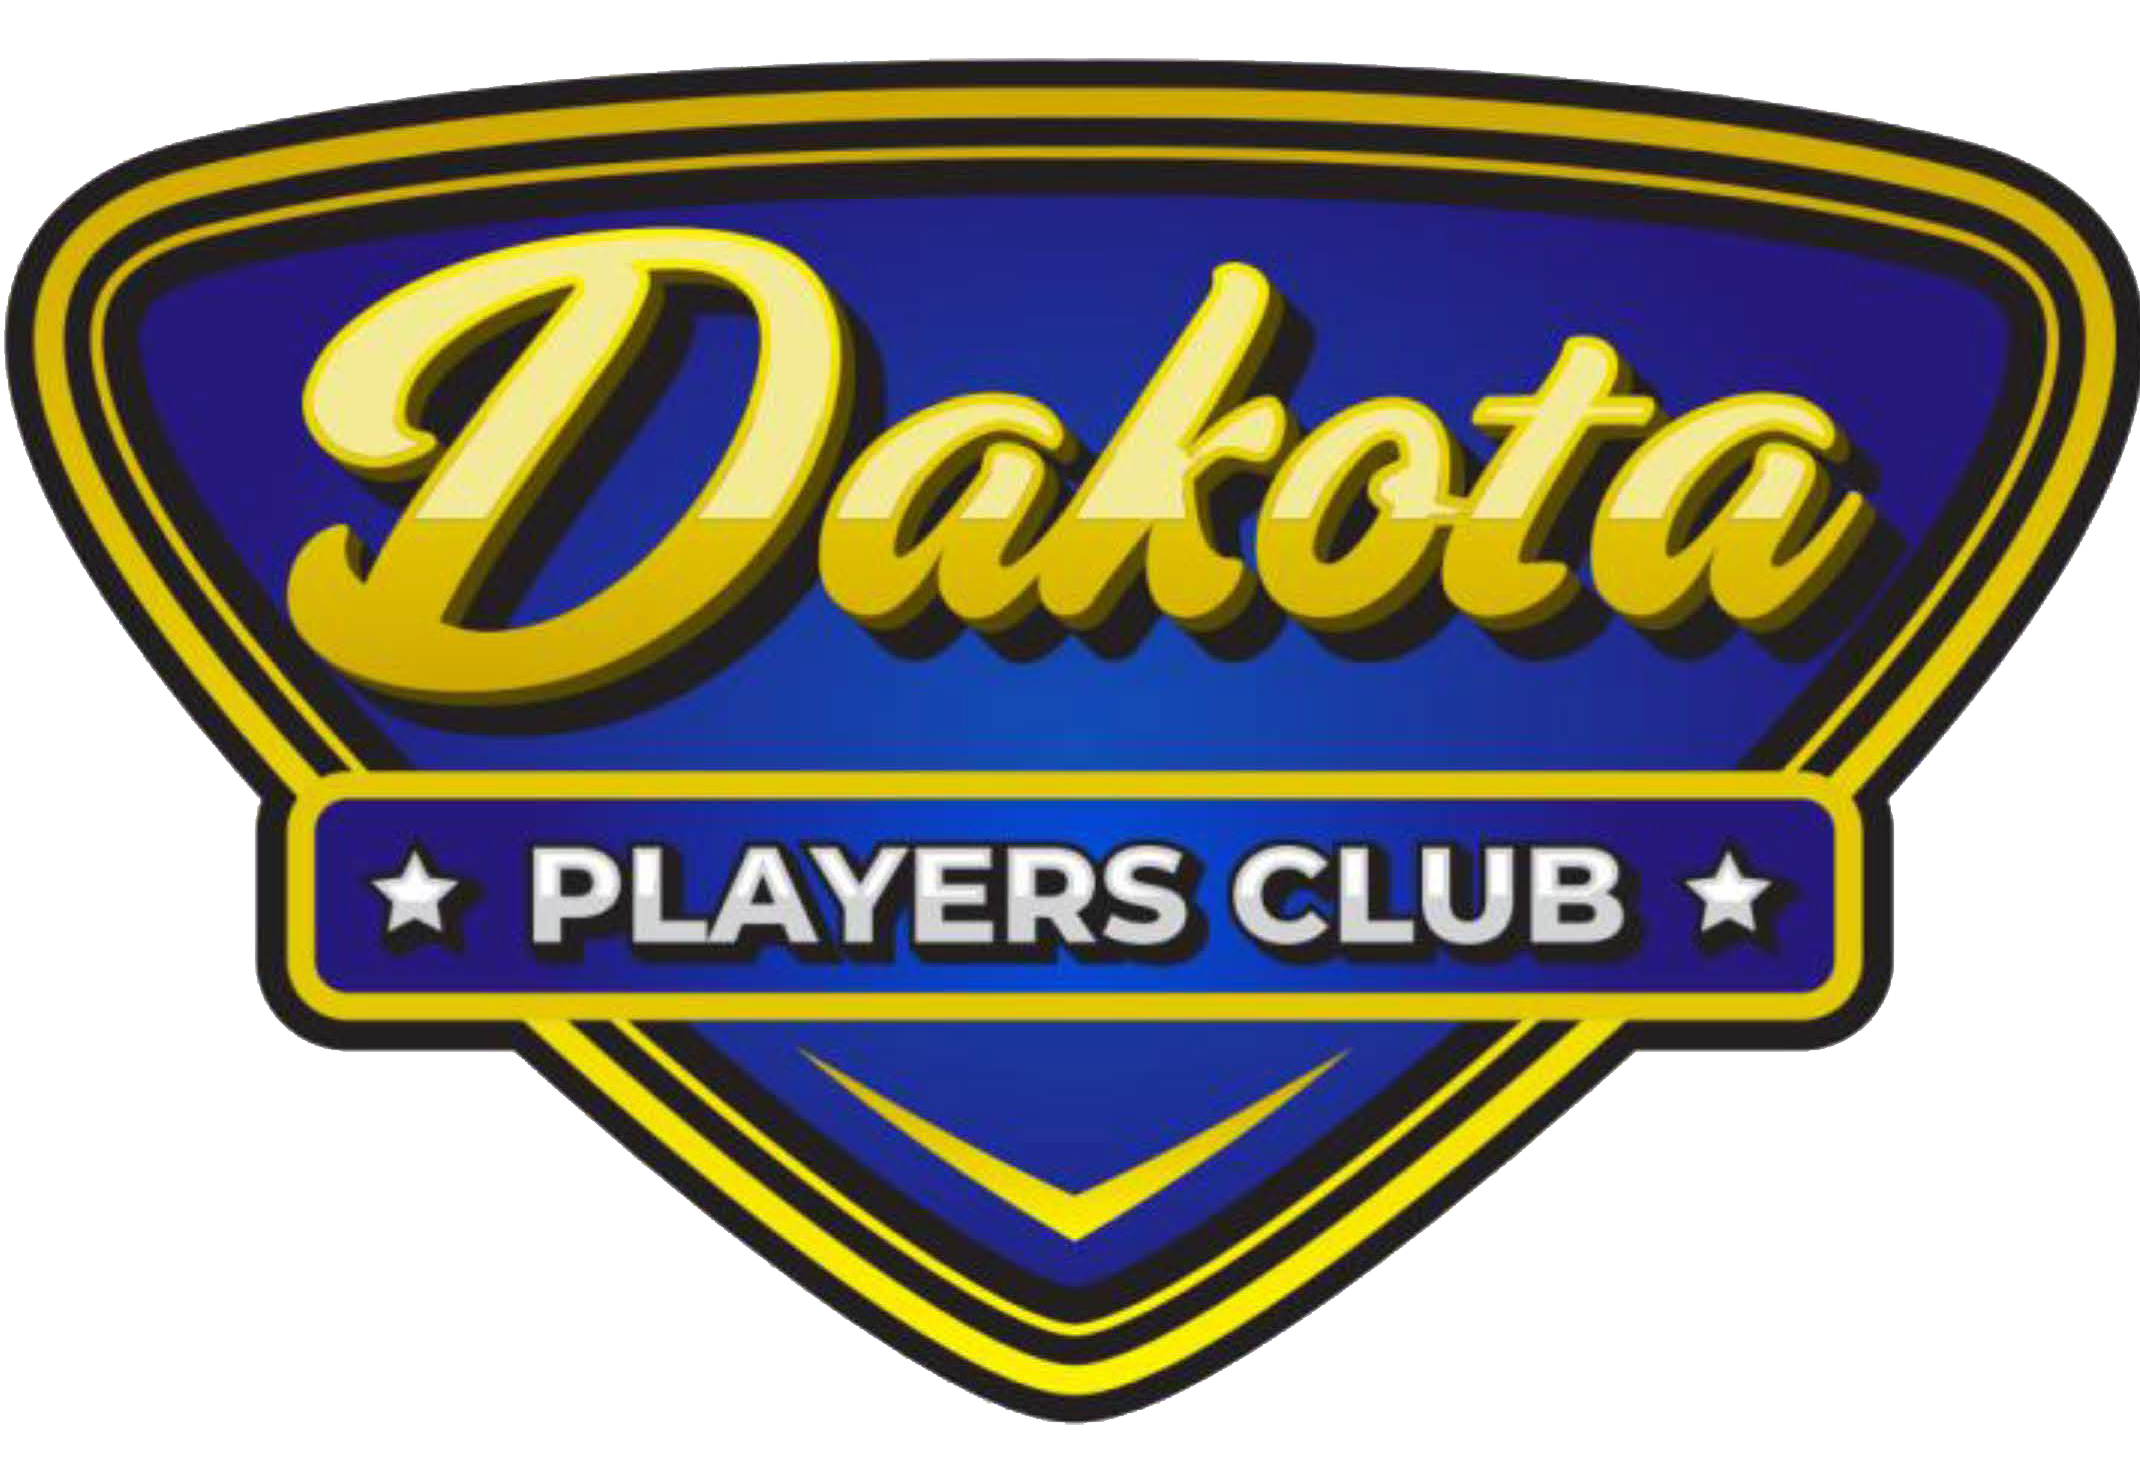 Dakota Players Club